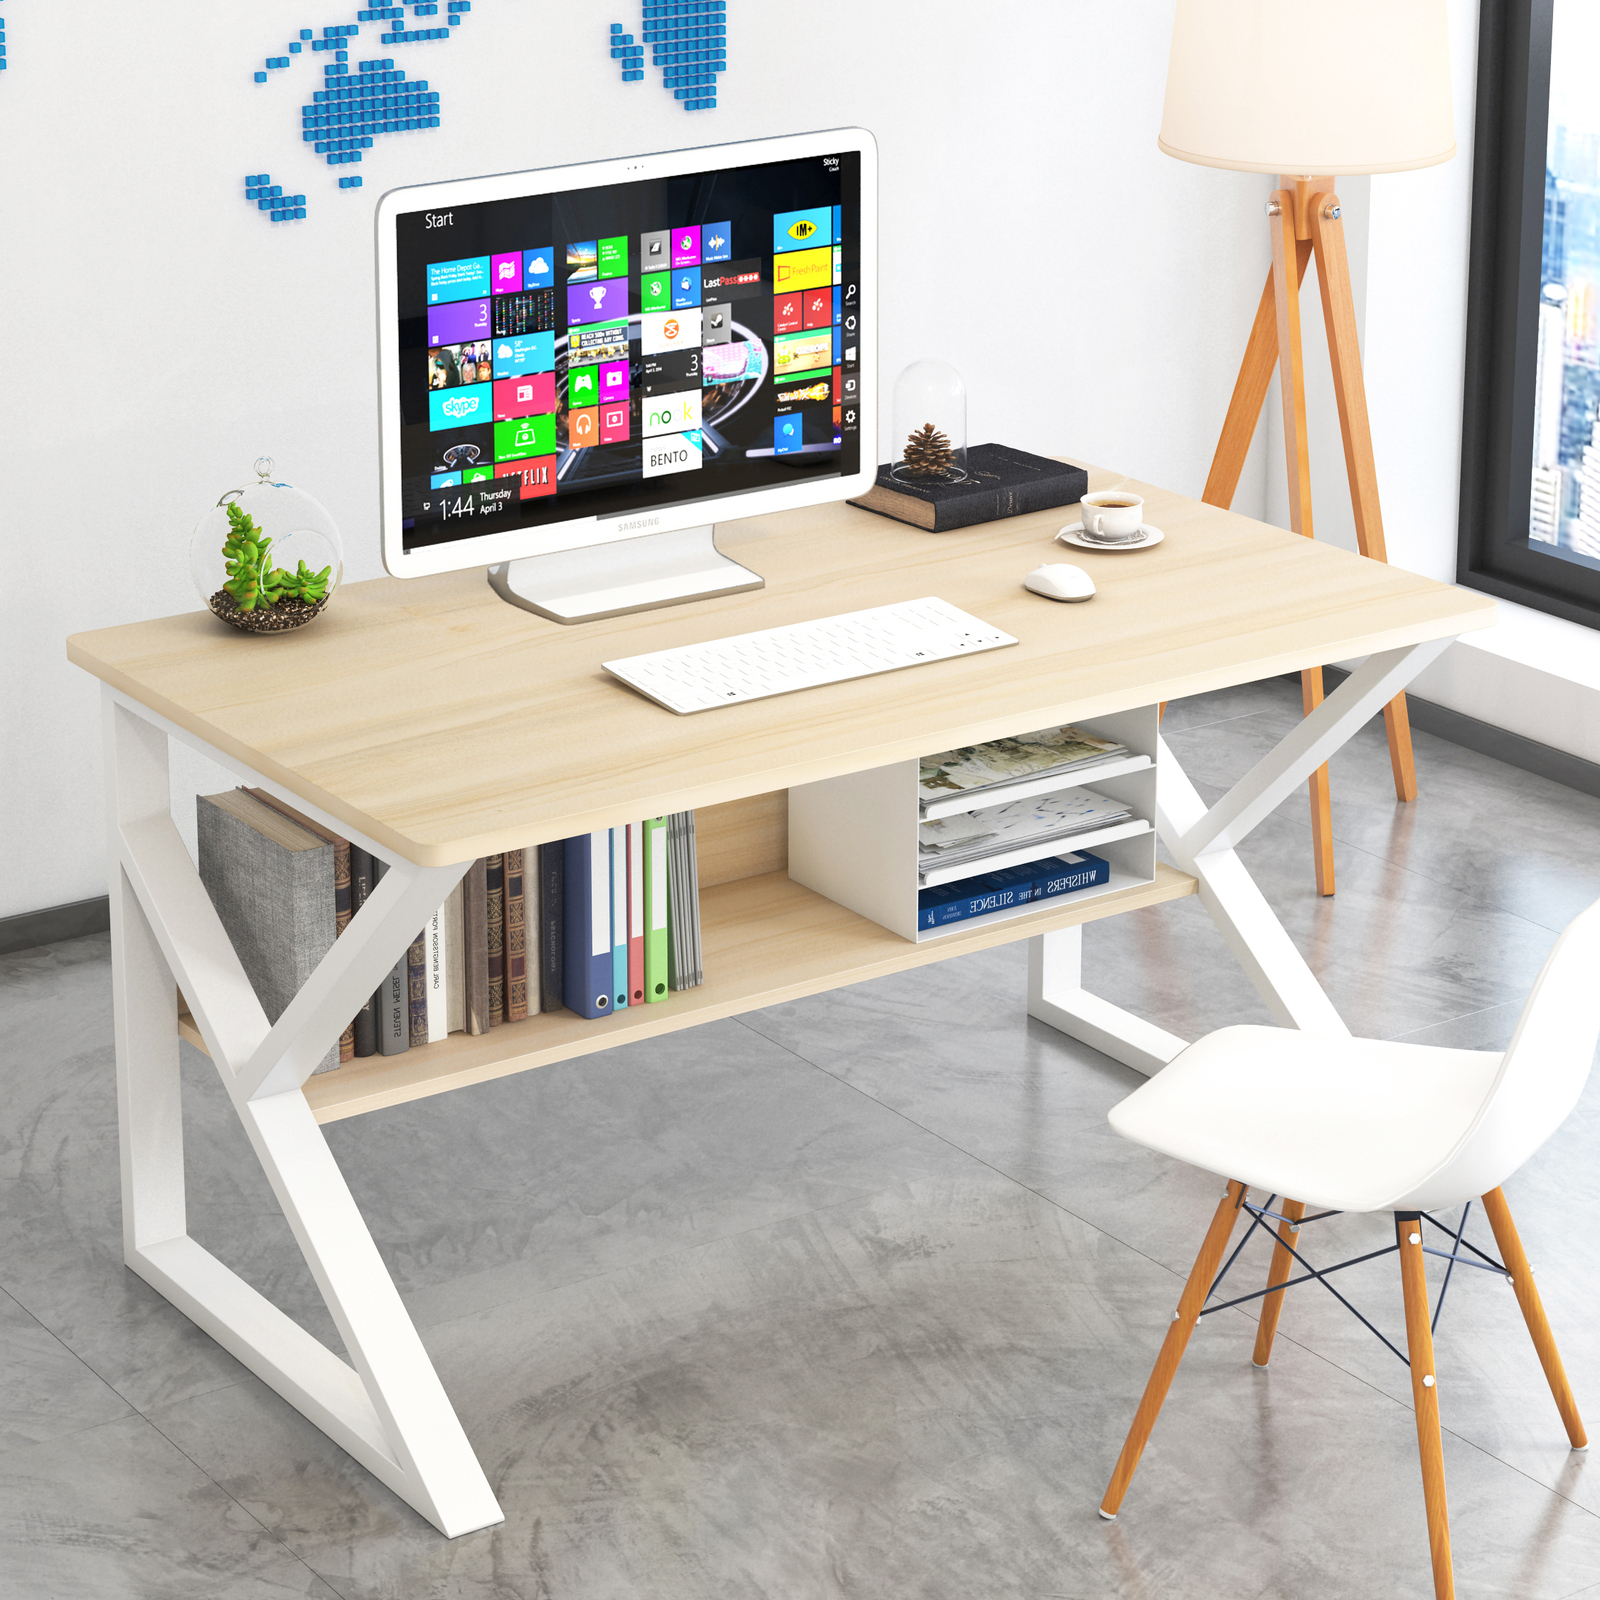 Kori Wood & Metal Computer Desk with Shelf (White Oak) - 80cm